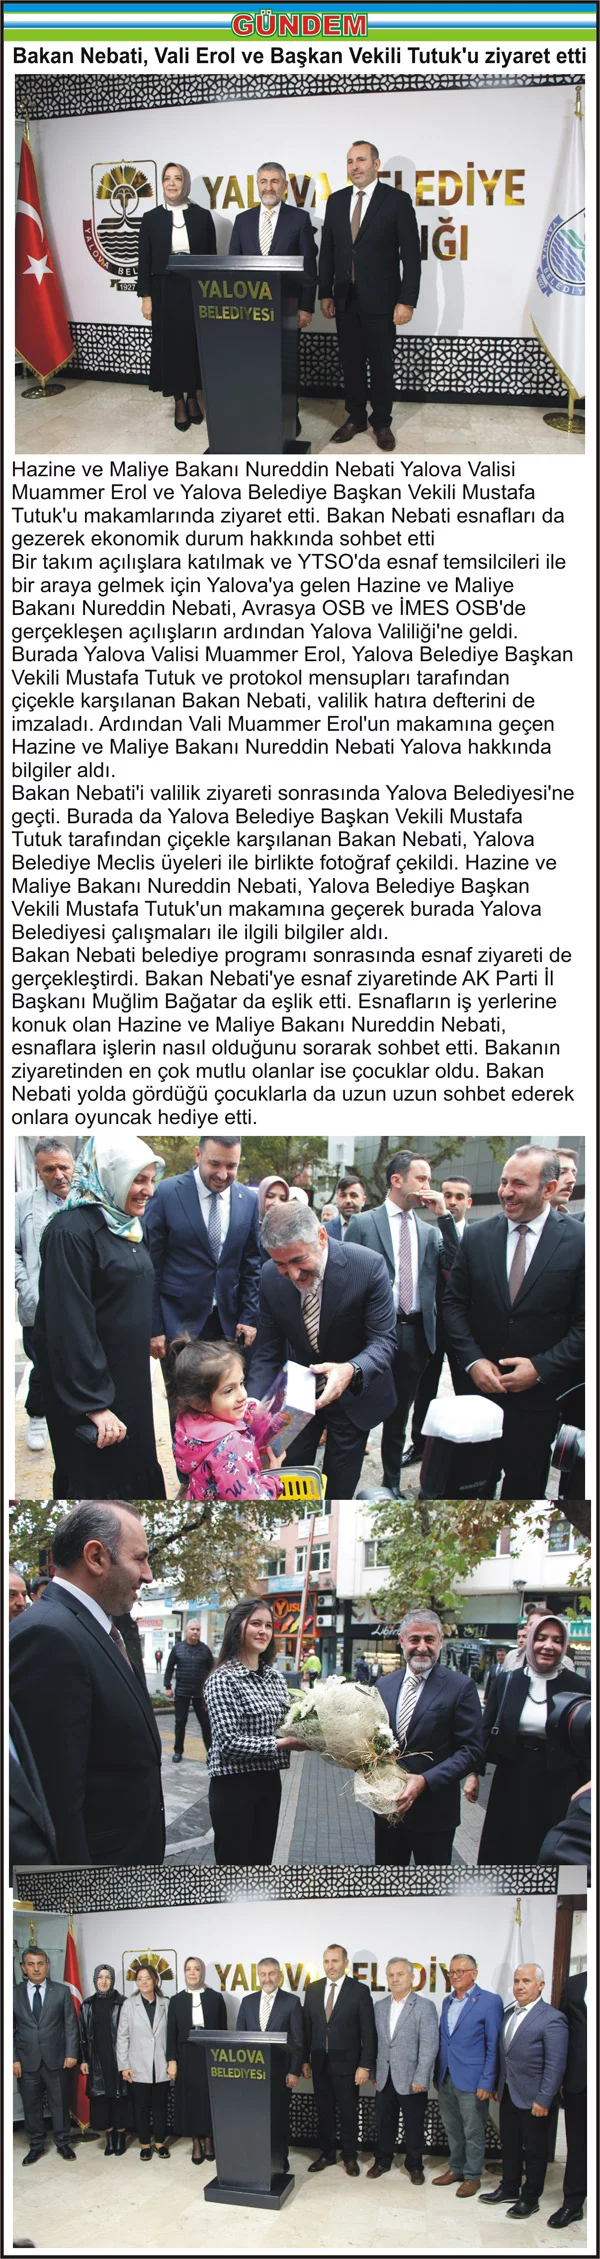 Bakan Nebati, Vali Erol ve Başkan Vekili Tutuk’u ziyaret etti